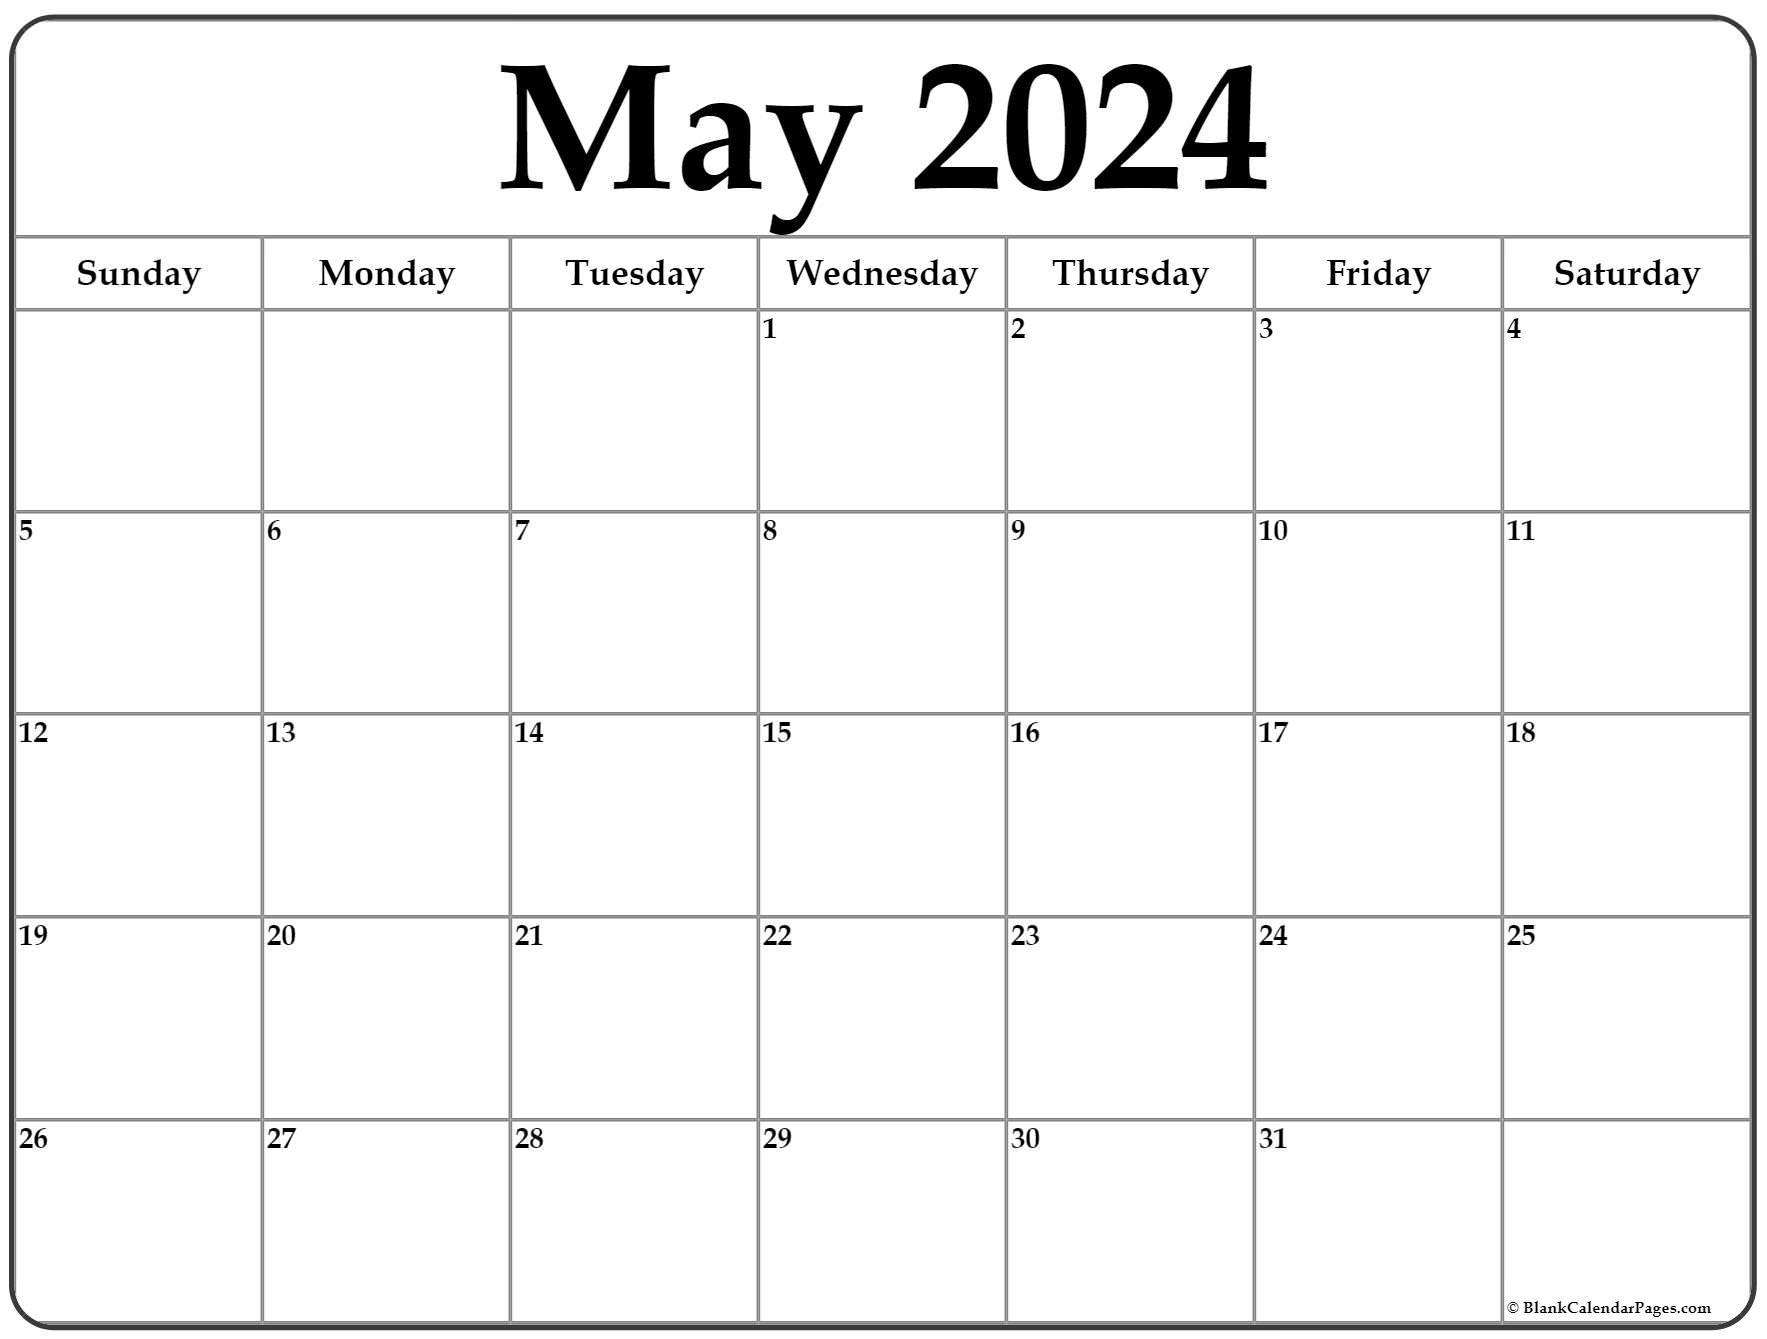 May 2024 Calendar | Free Printable Calendar for Calendar May 2024 Printable Free